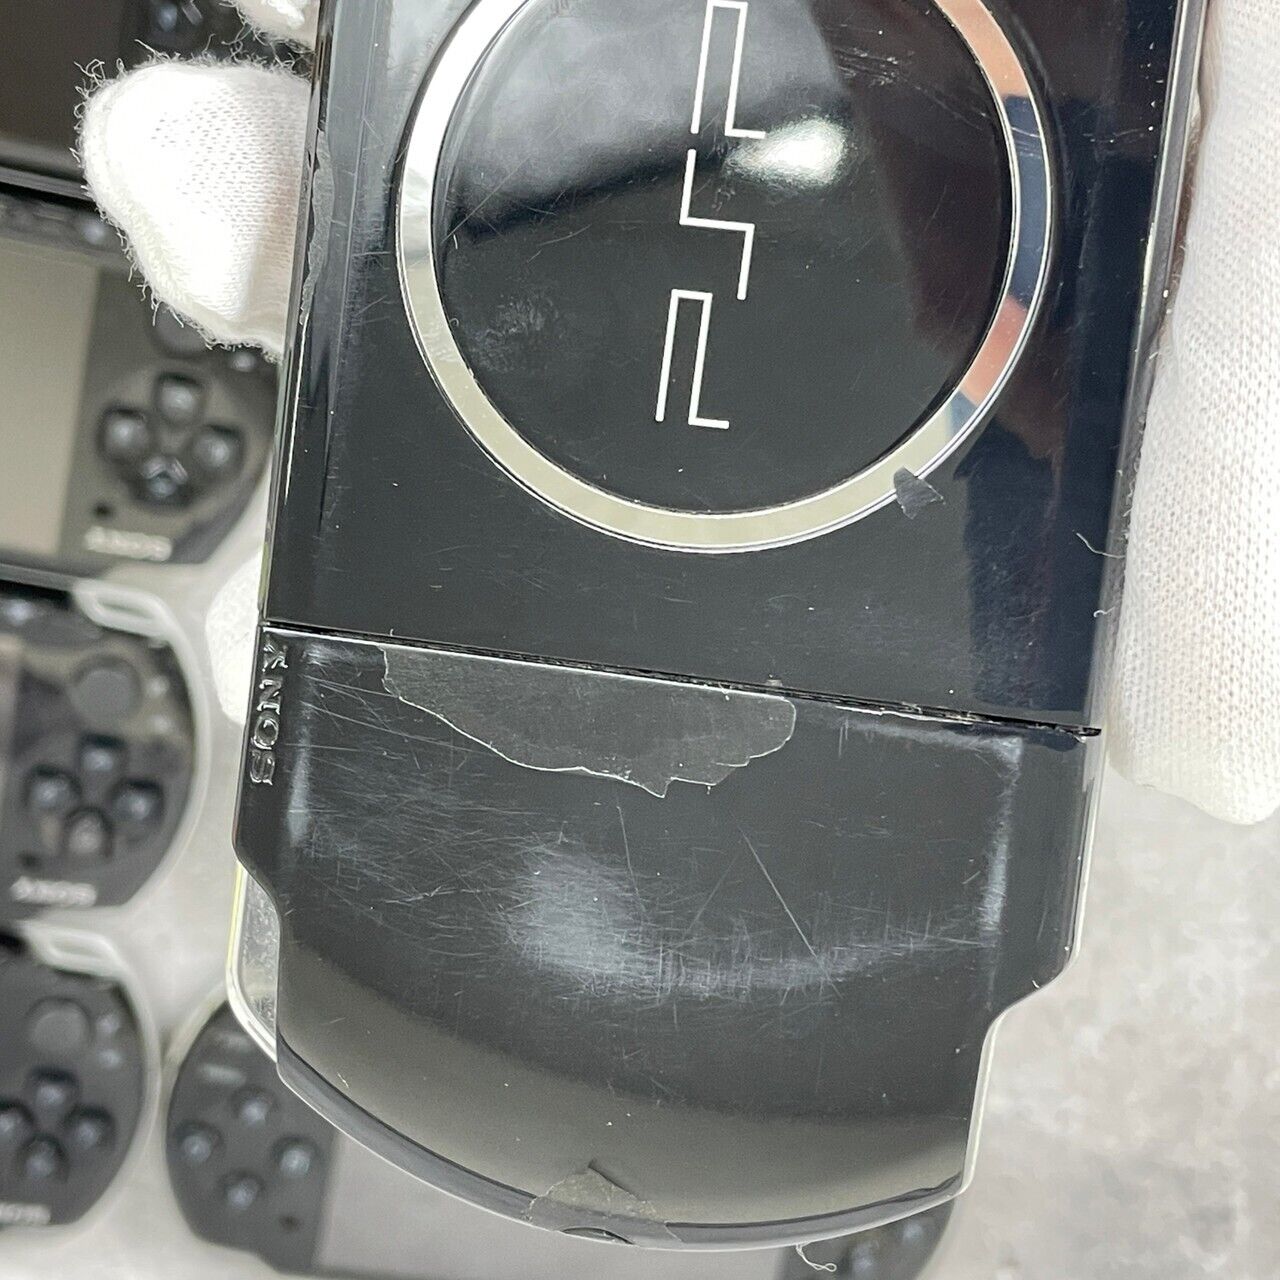 PSP 3000 SONY Playstation Portable Console Only Random Colors Bulk Sale UsedGood